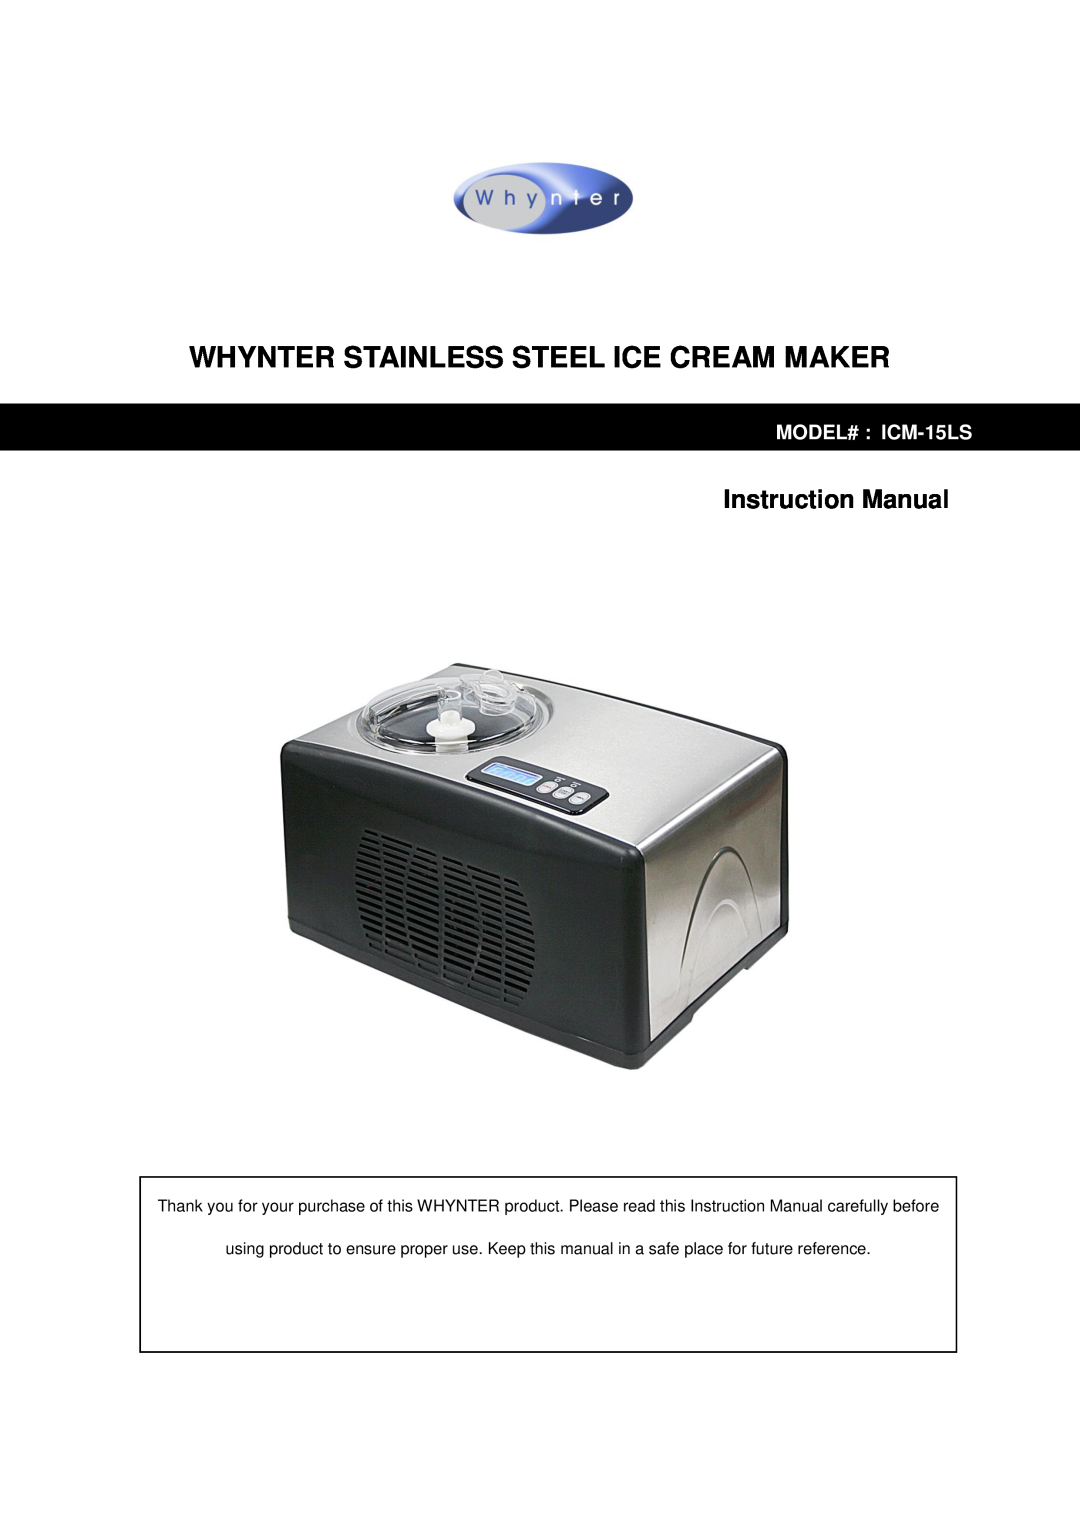 Whynter instruction manual Whynter Stainless Steel Ice Cream Maker, MODEL# ICM-15LS 